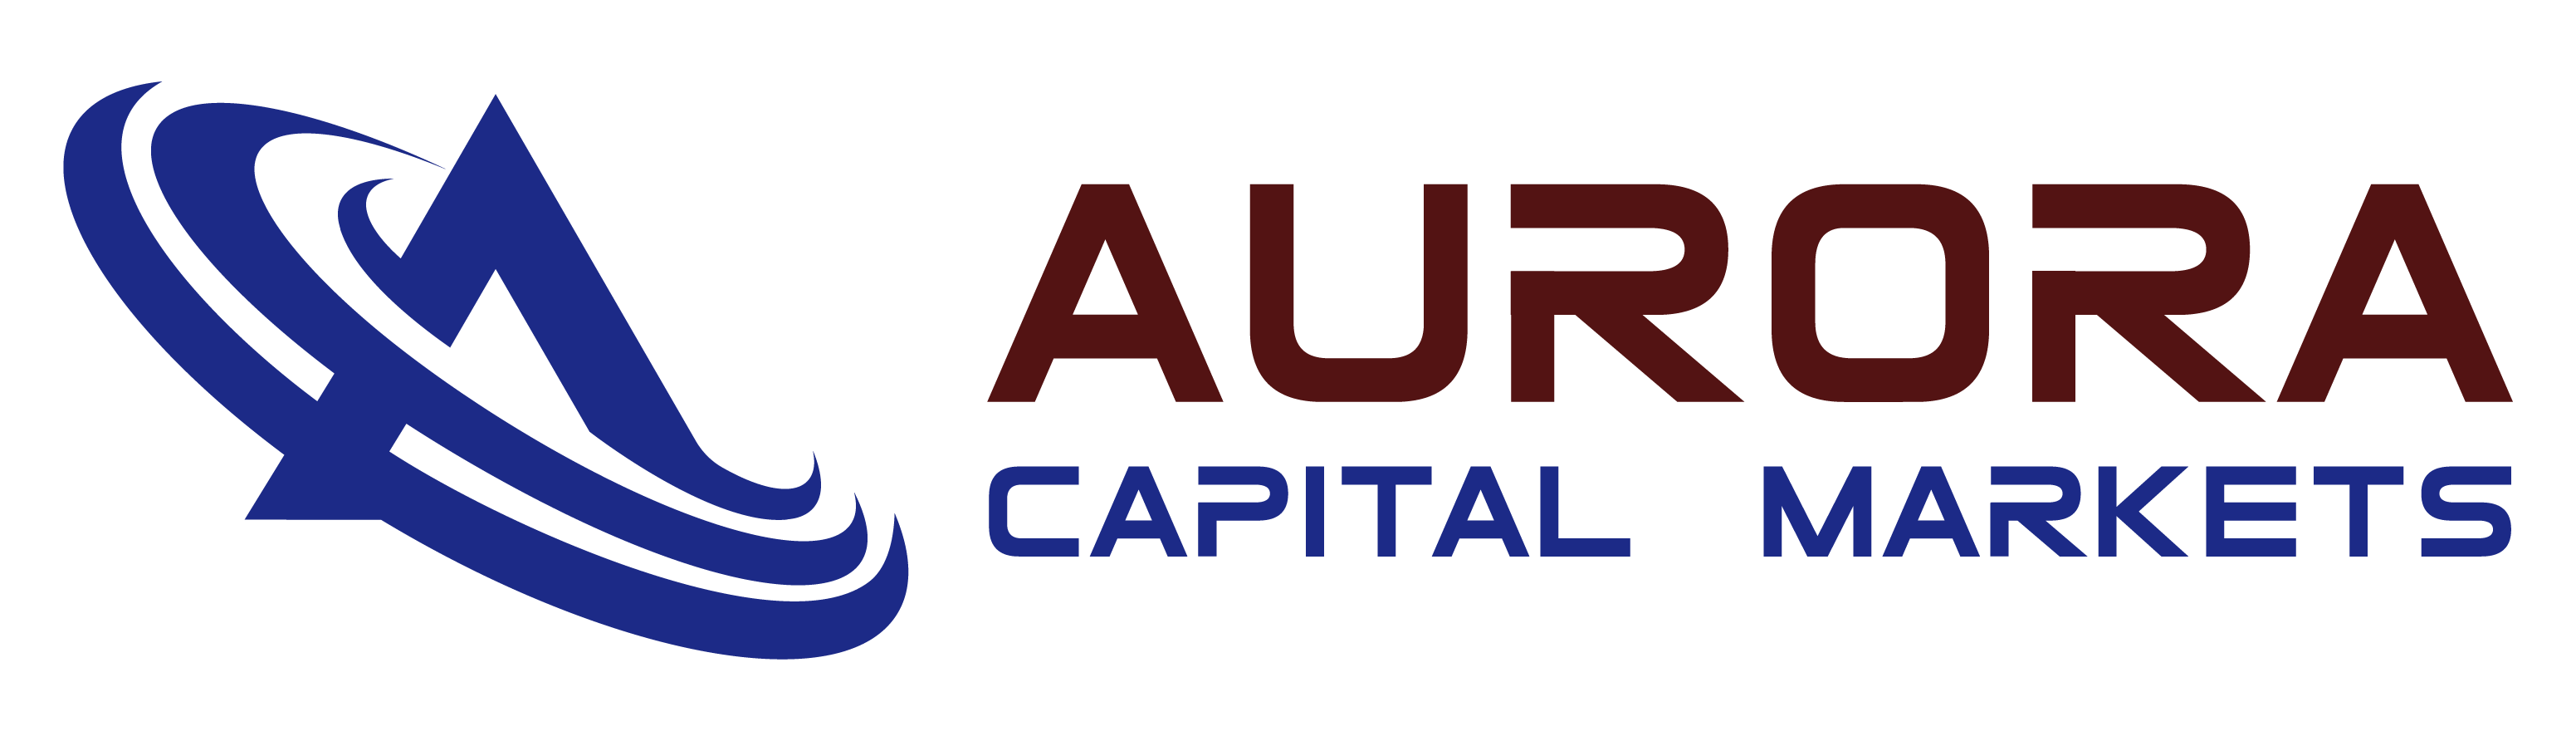 Aurora Capital Markets